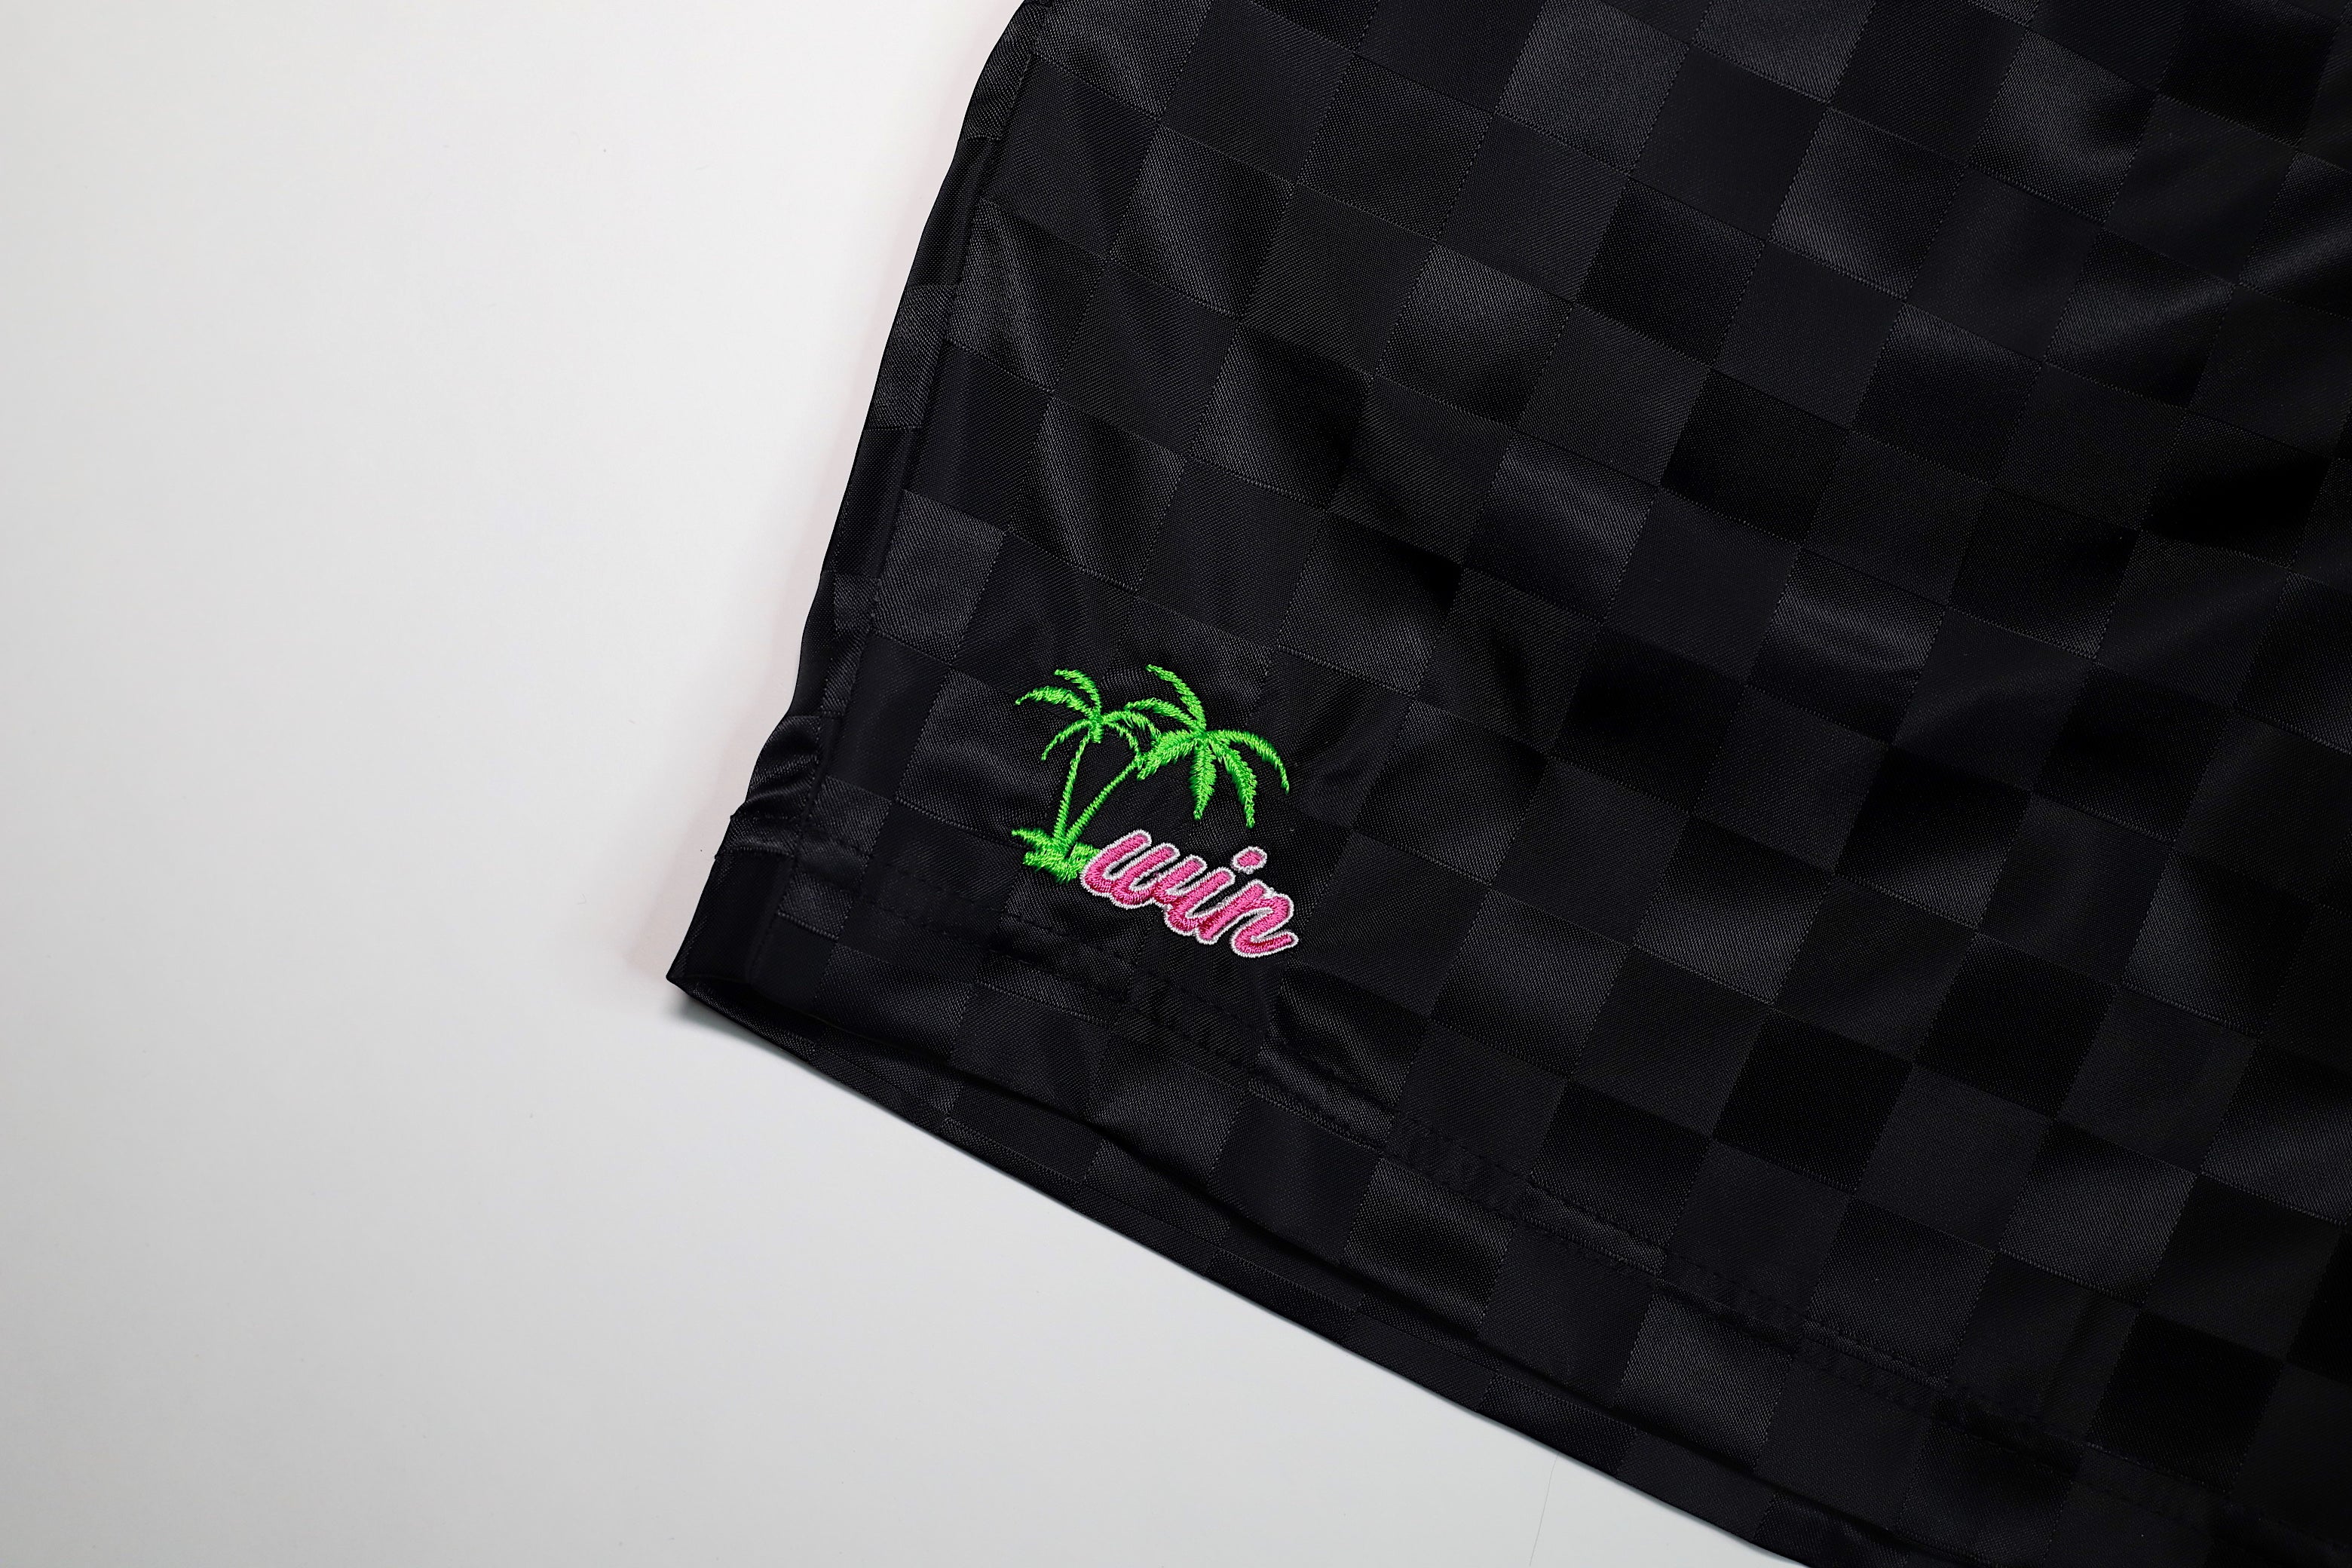 Winbros - "Palm Tree" Checkerboard Umbro Shorts - Pink/Black